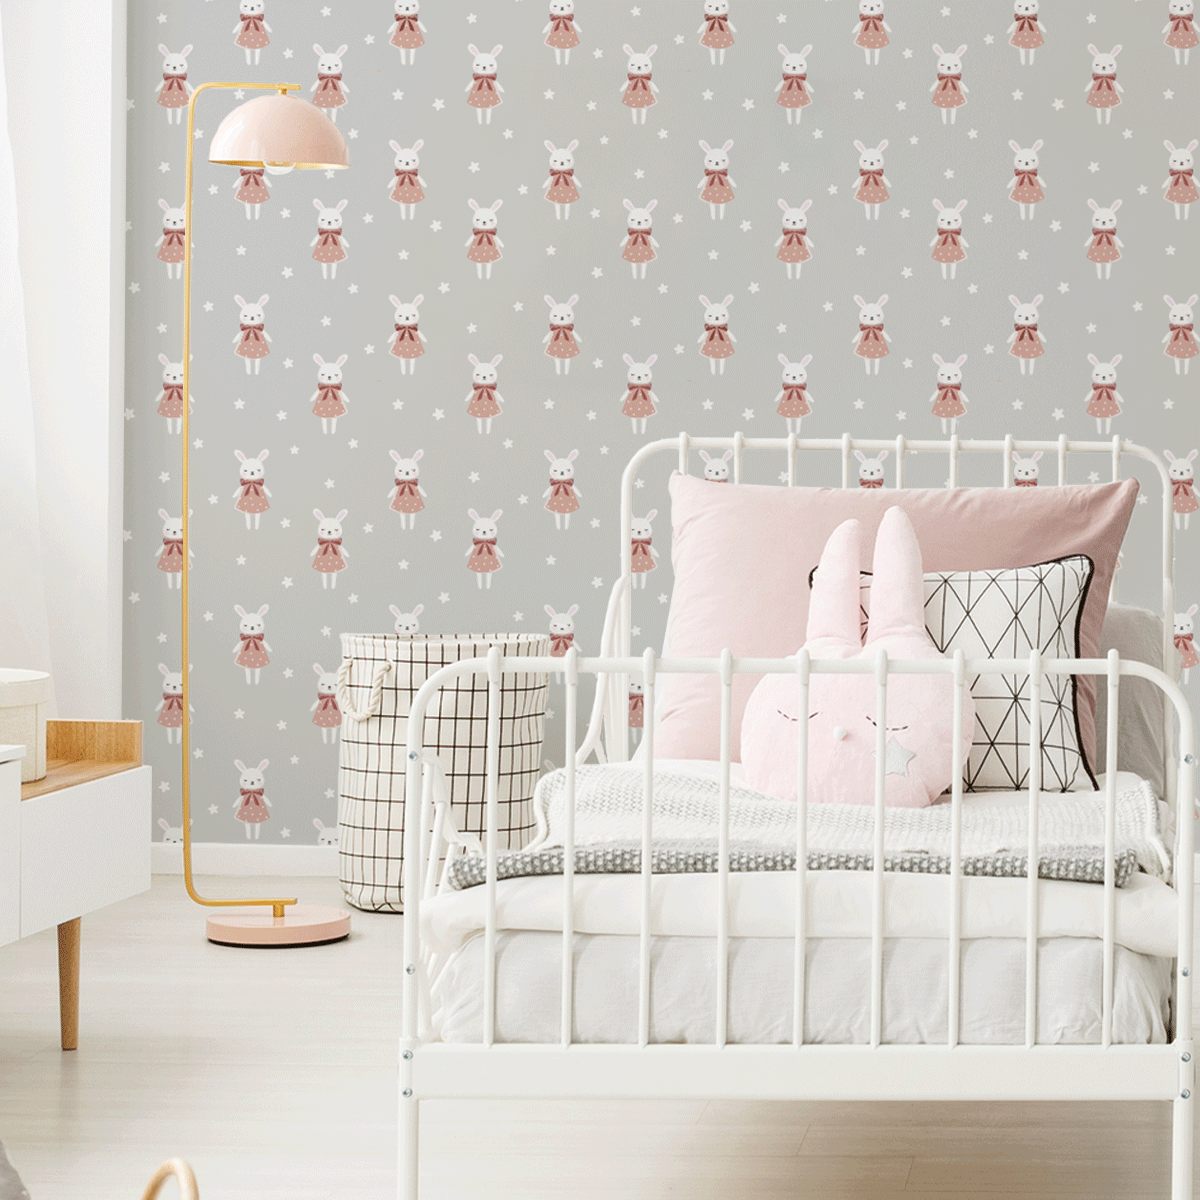 removable wallpaper, kids bedroom wallpaper, nursery wallpaper, kids bedroom ideas, nursery ideas, white bunnies wallpaper, white rabbits wallpaper, bunny girls wallpaper, rabbit girls wallpaper